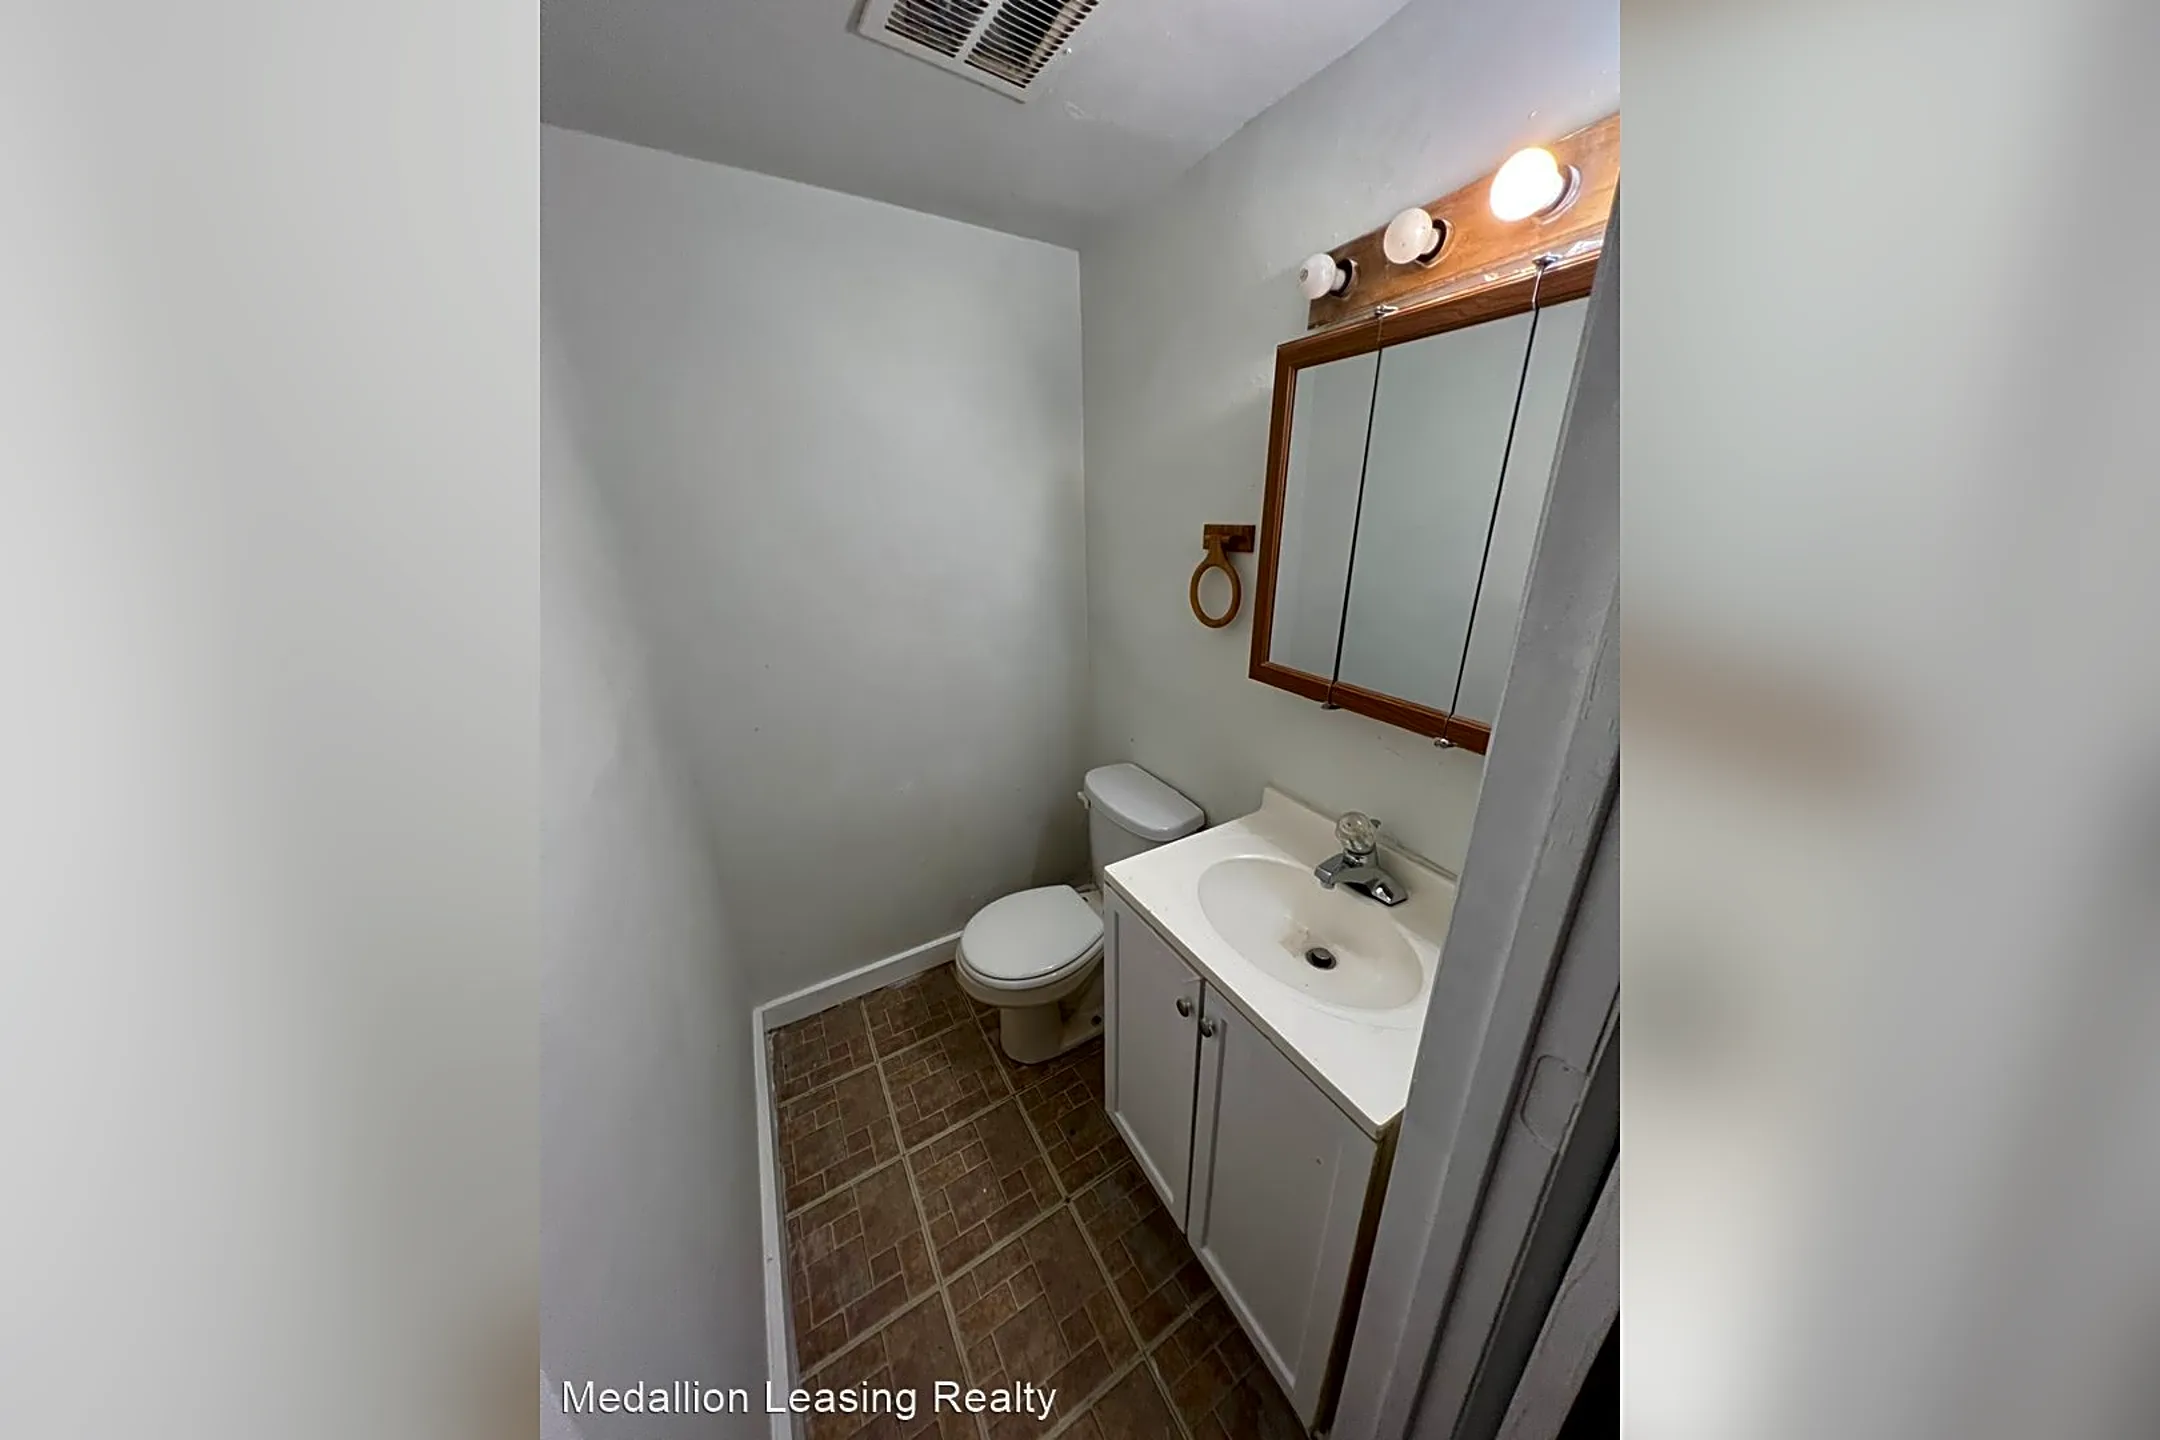 Bathroom - 10635 S Cottage Grove Avenue - Chicago, IL